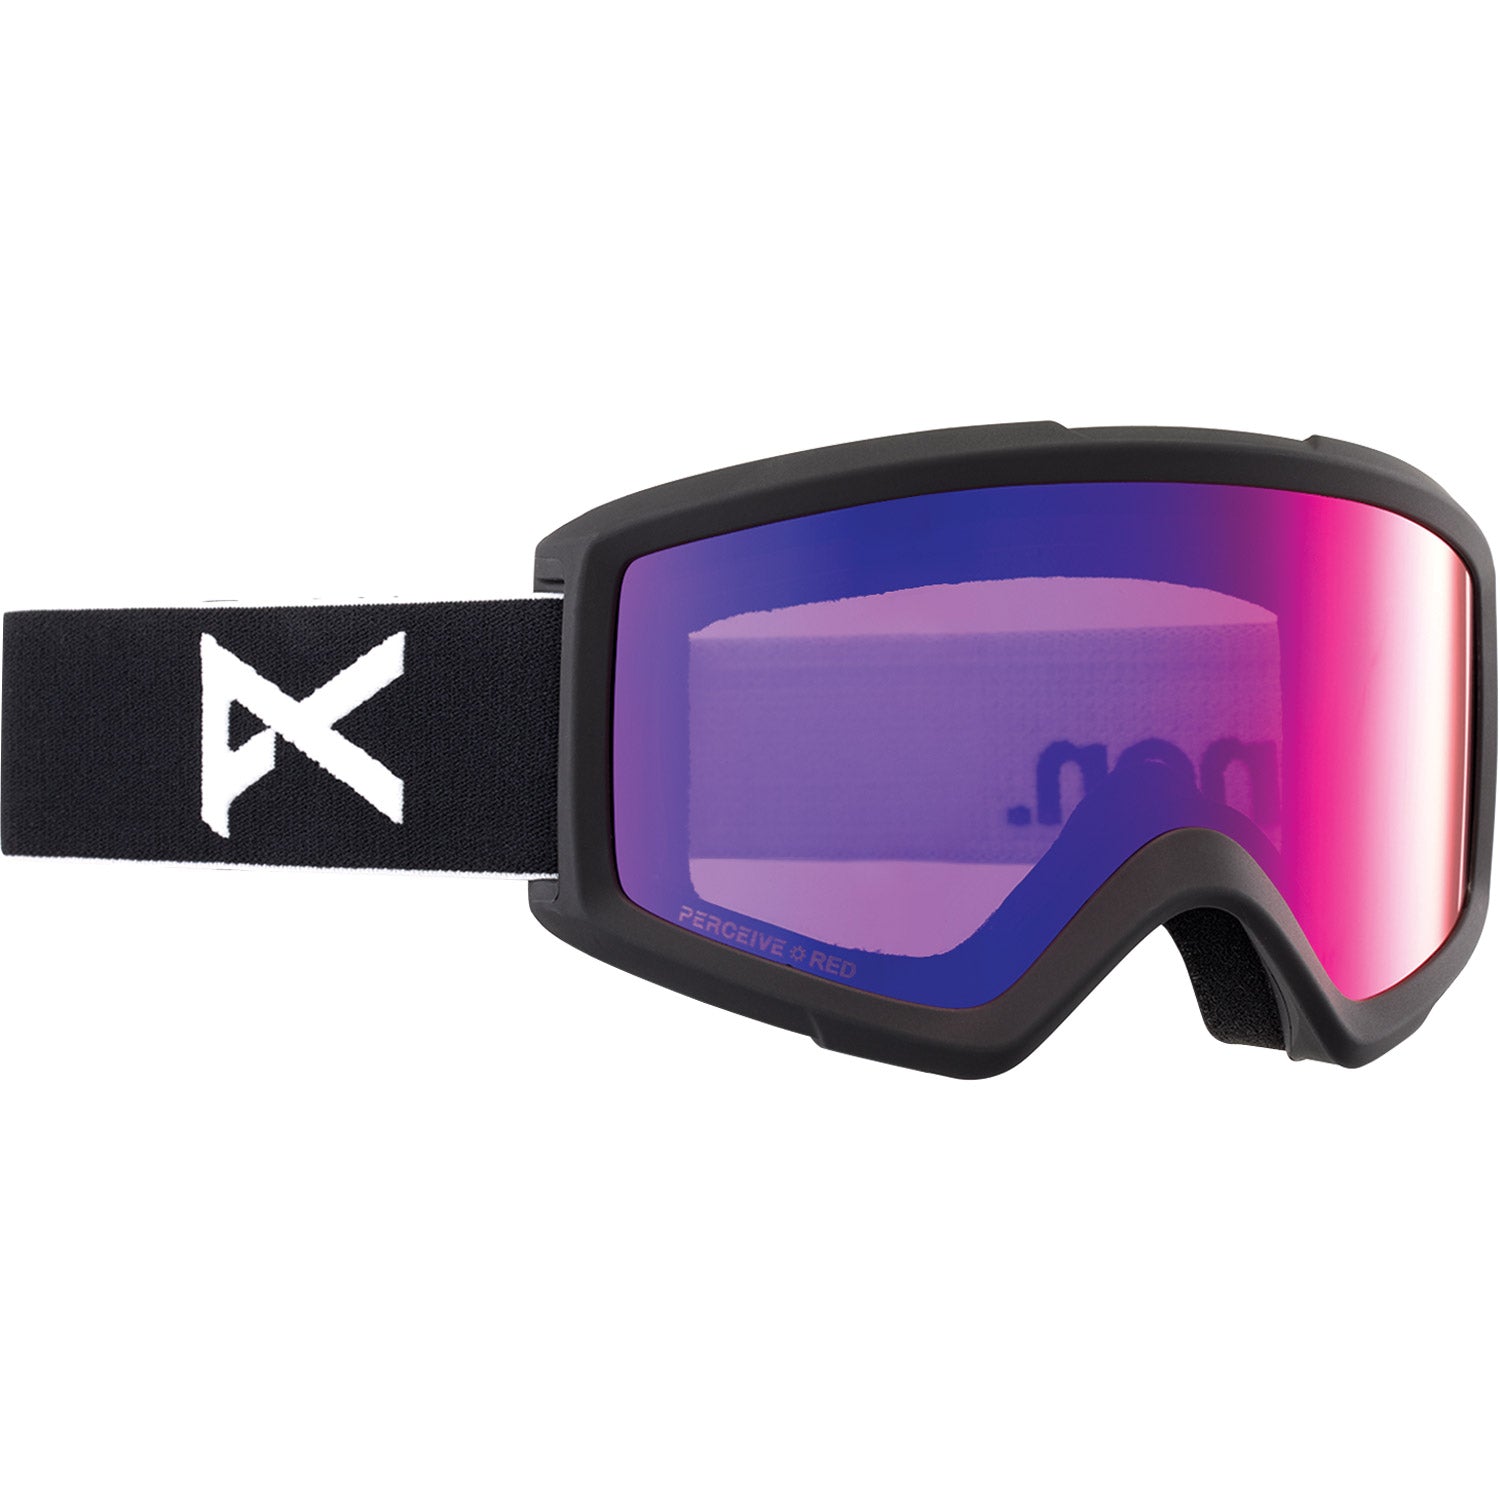 Helix 2.0 Snow Goggle